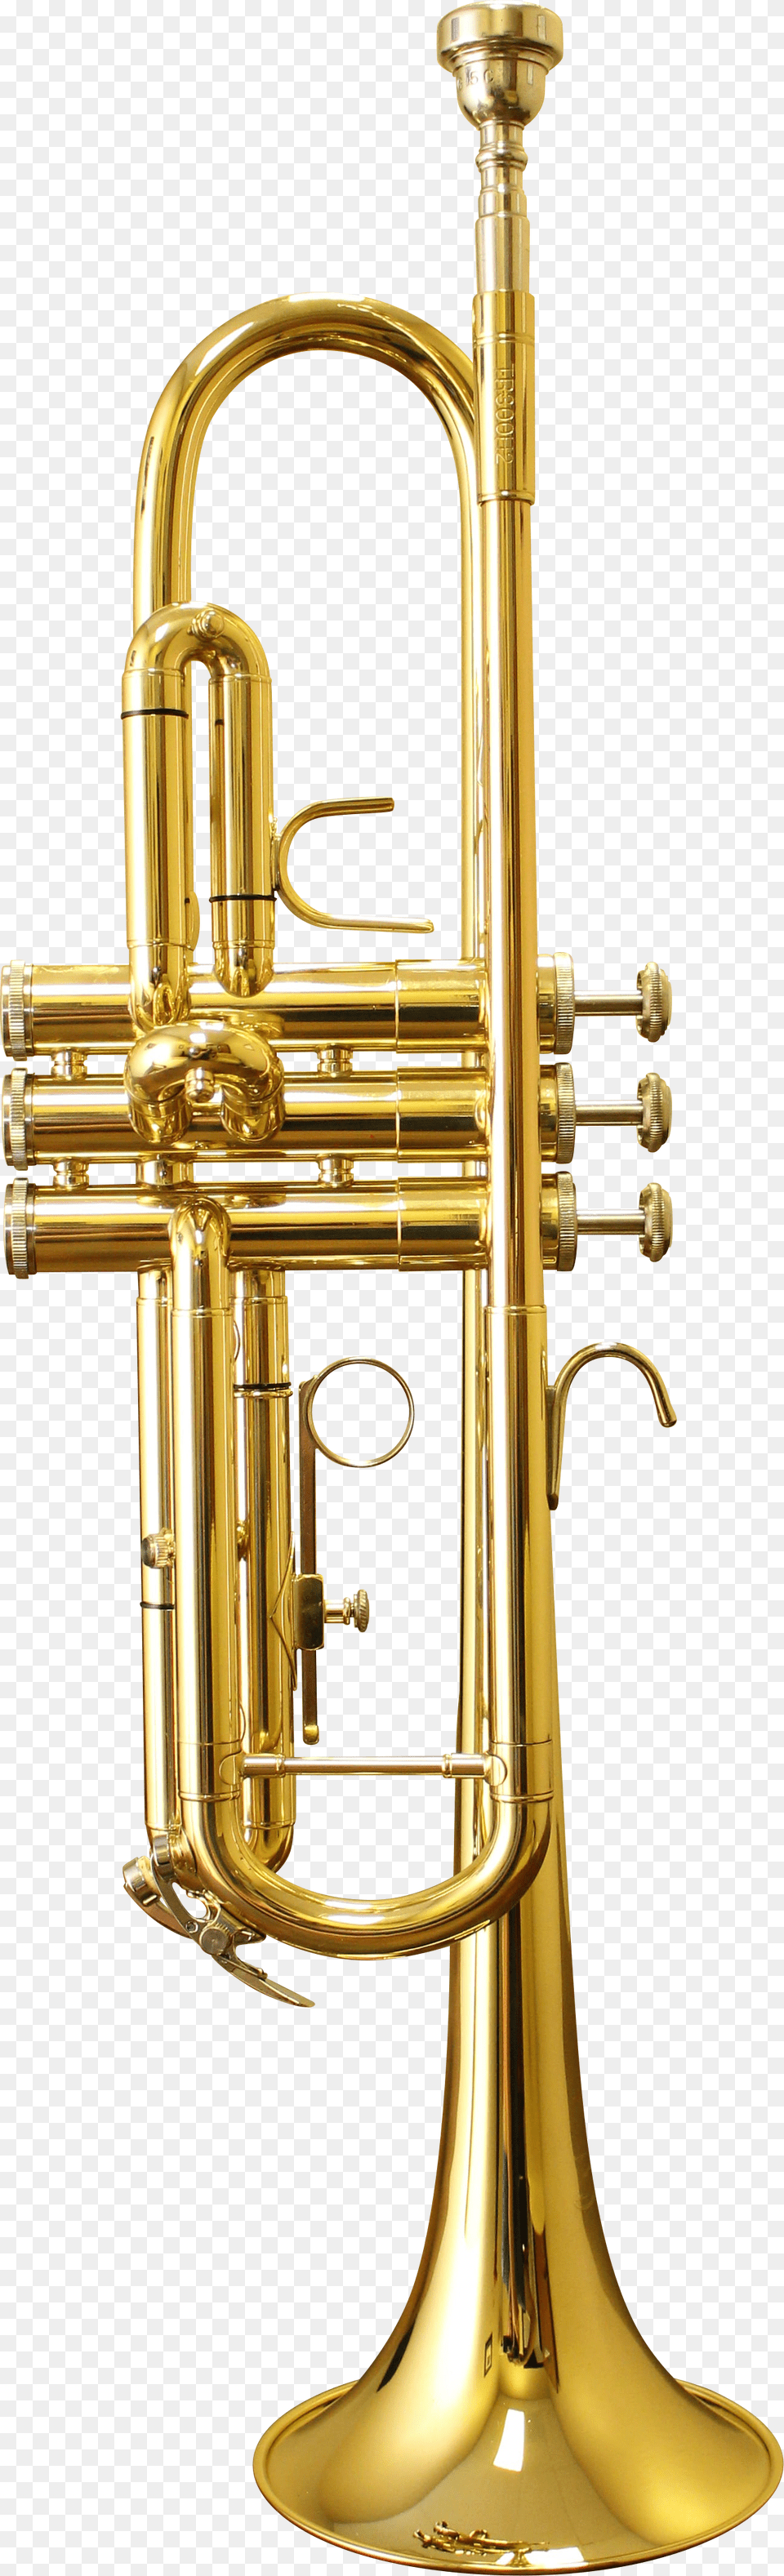 Trumpet, Bathroom, Shower Faucet, Room, Musical Instrument Png Image